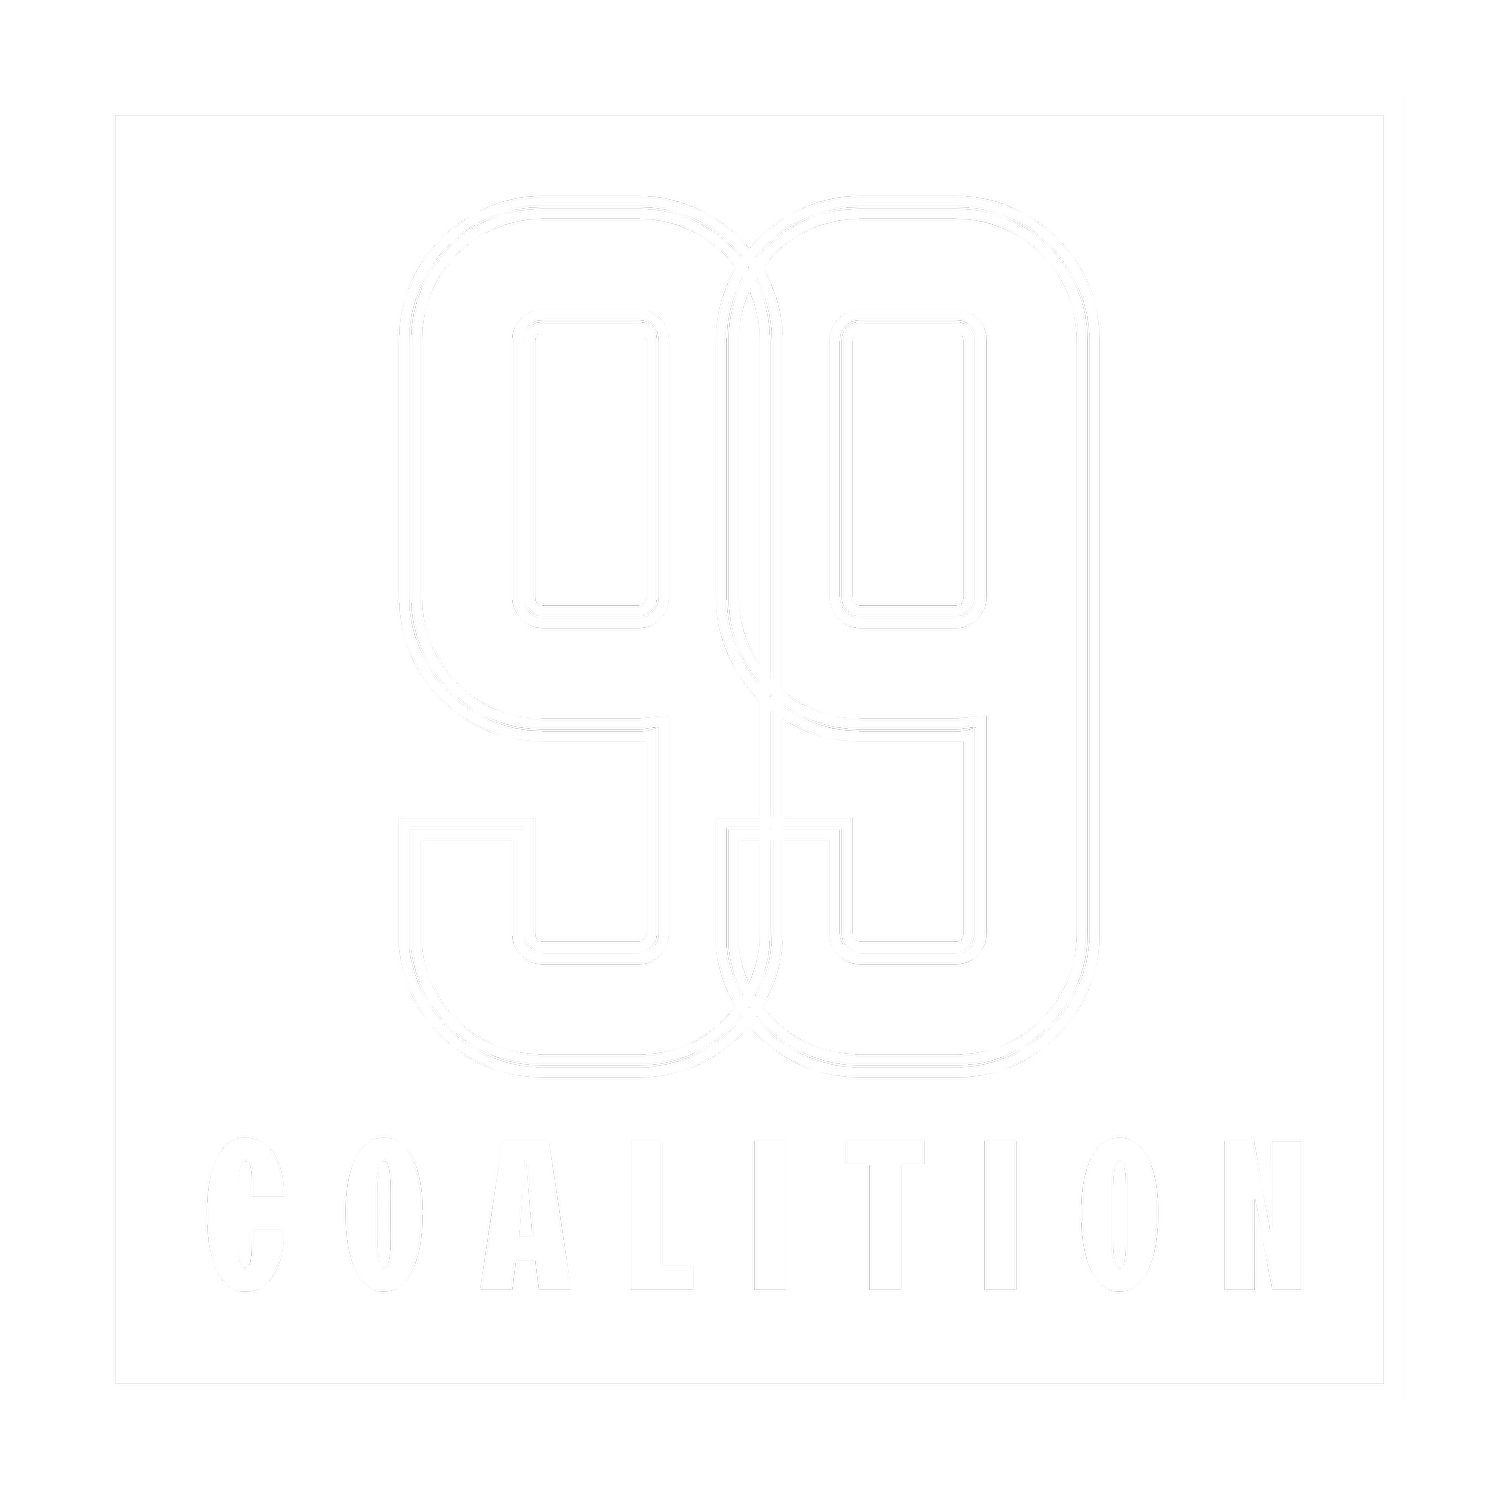 99 Coalition